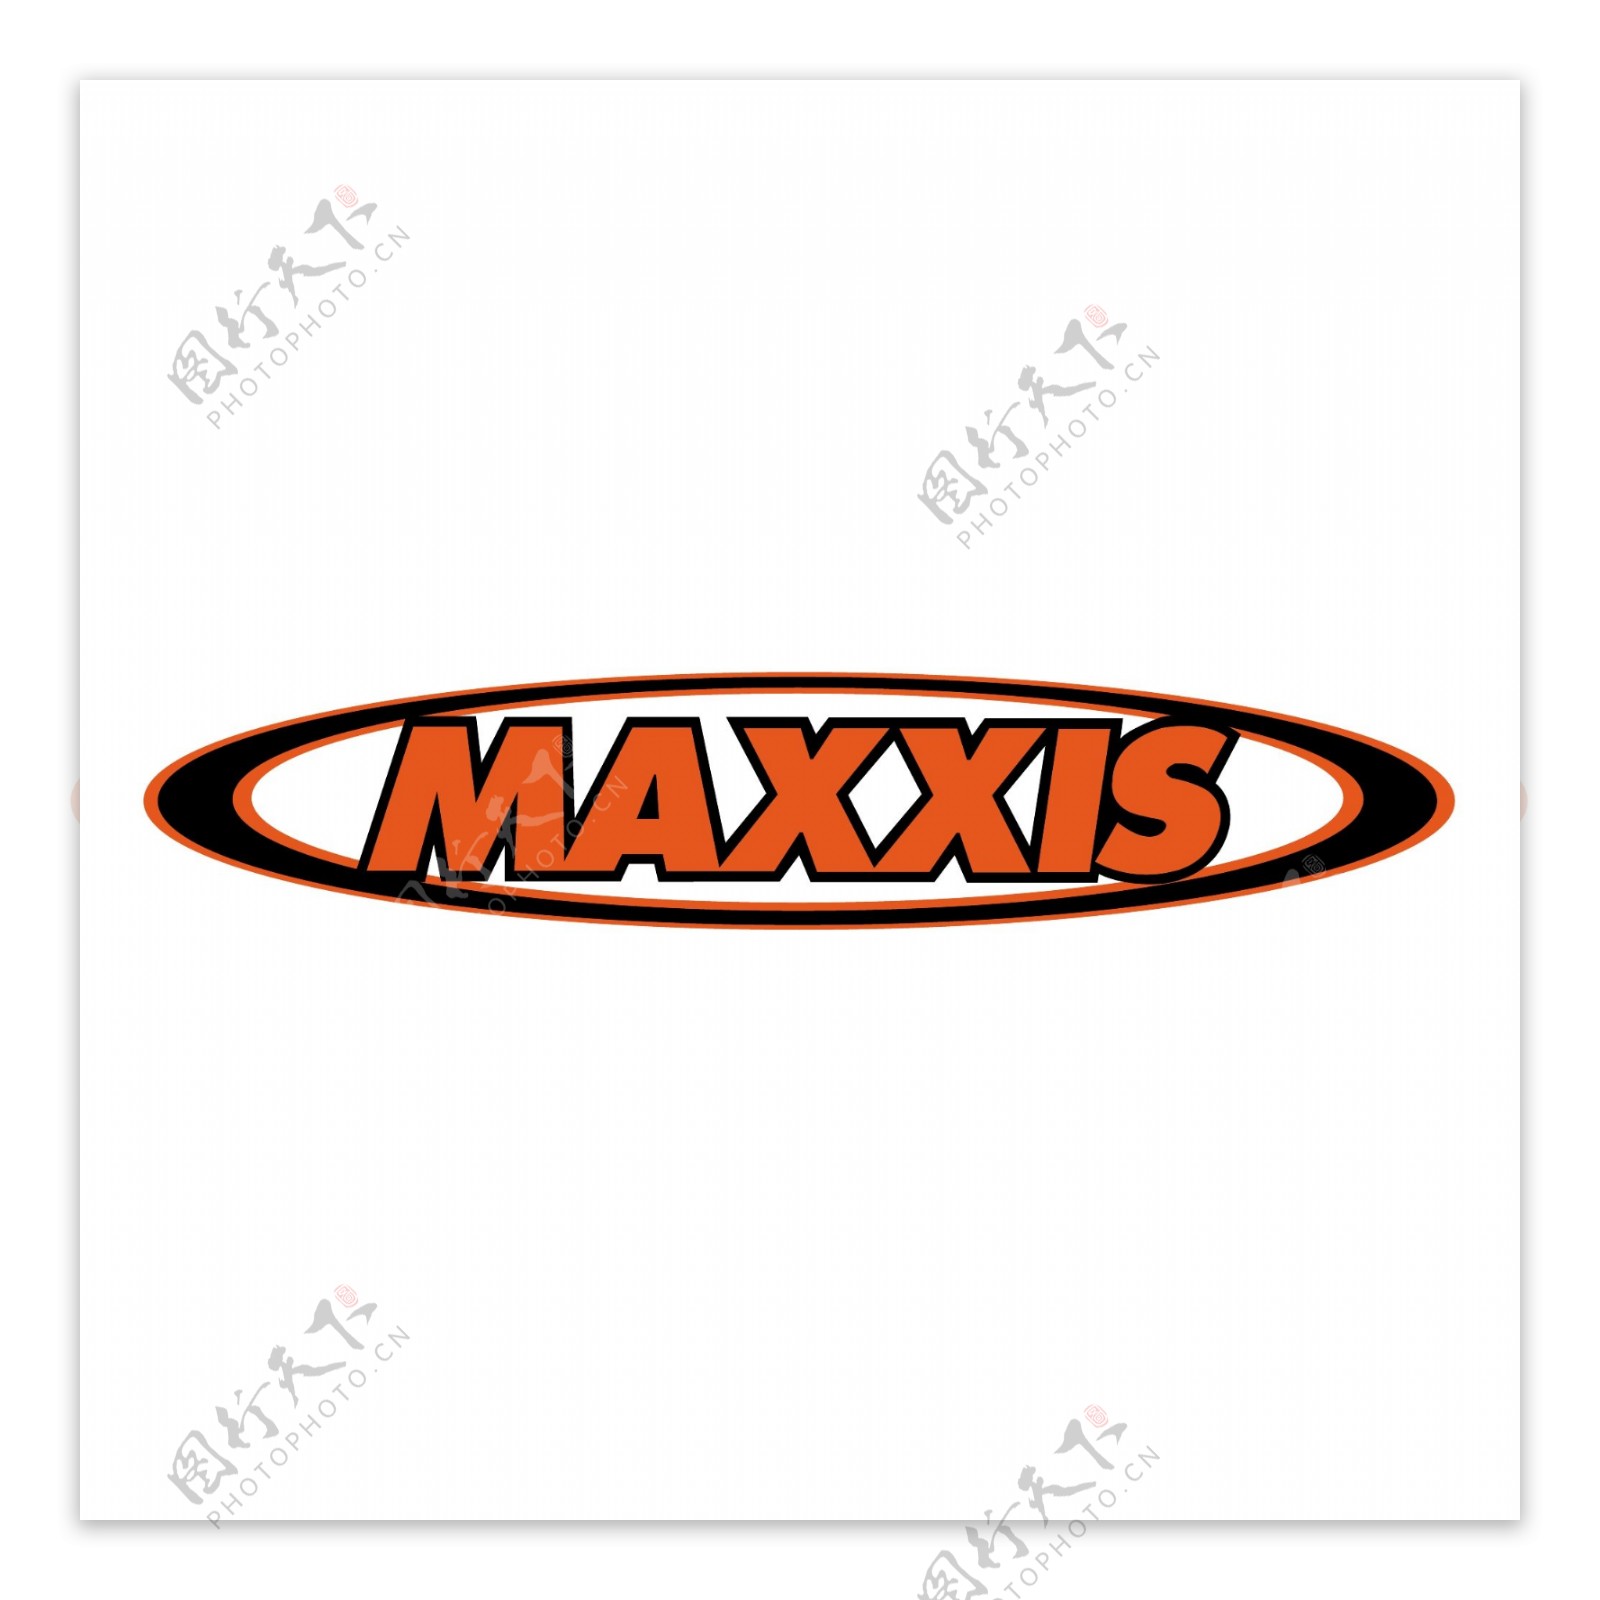 maxxis玛吉斯轮胎标志图片